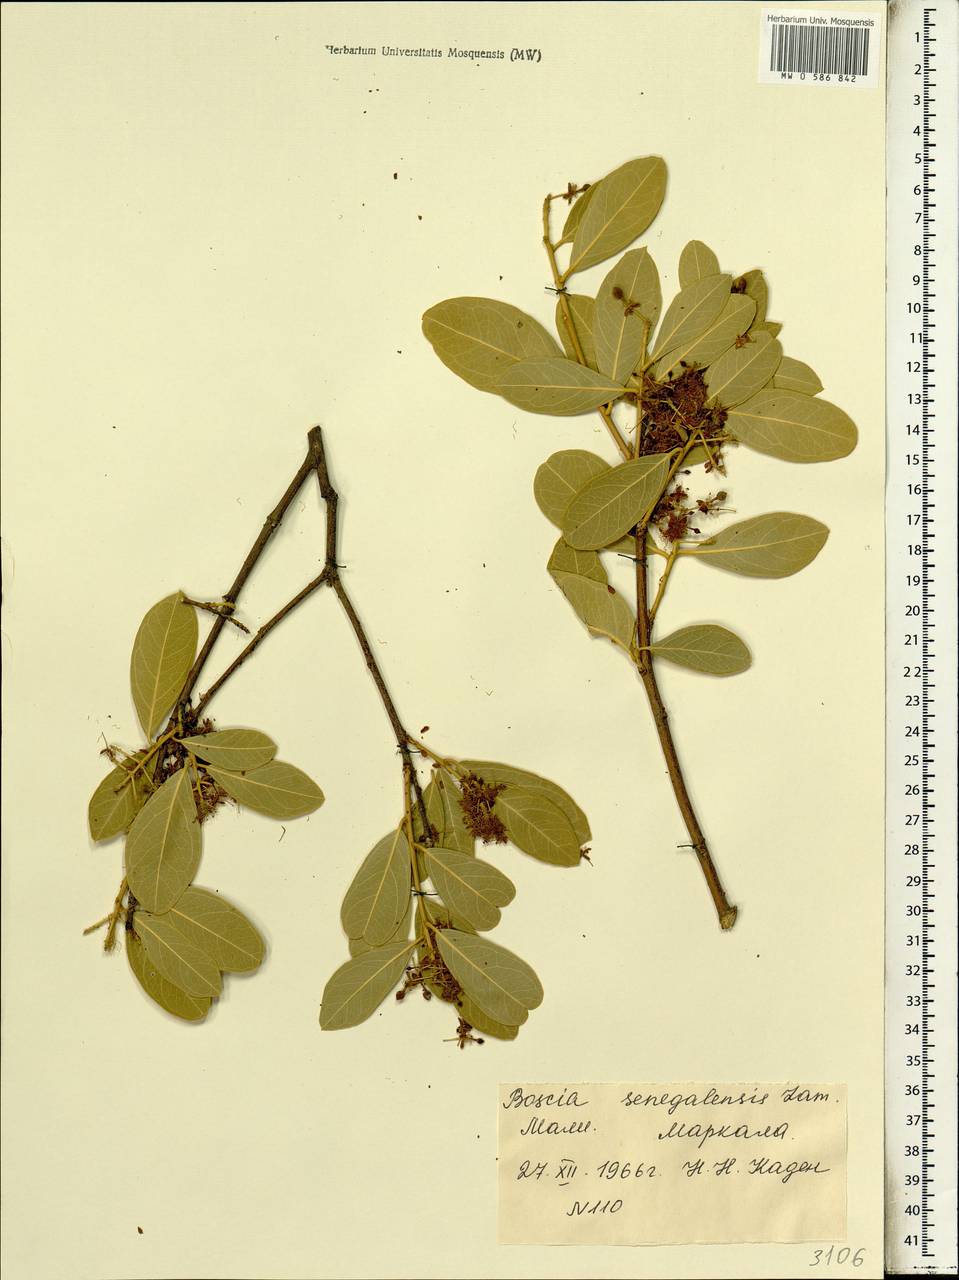 Boscia senegalensis Lam., Африка (AFR) (Мали)